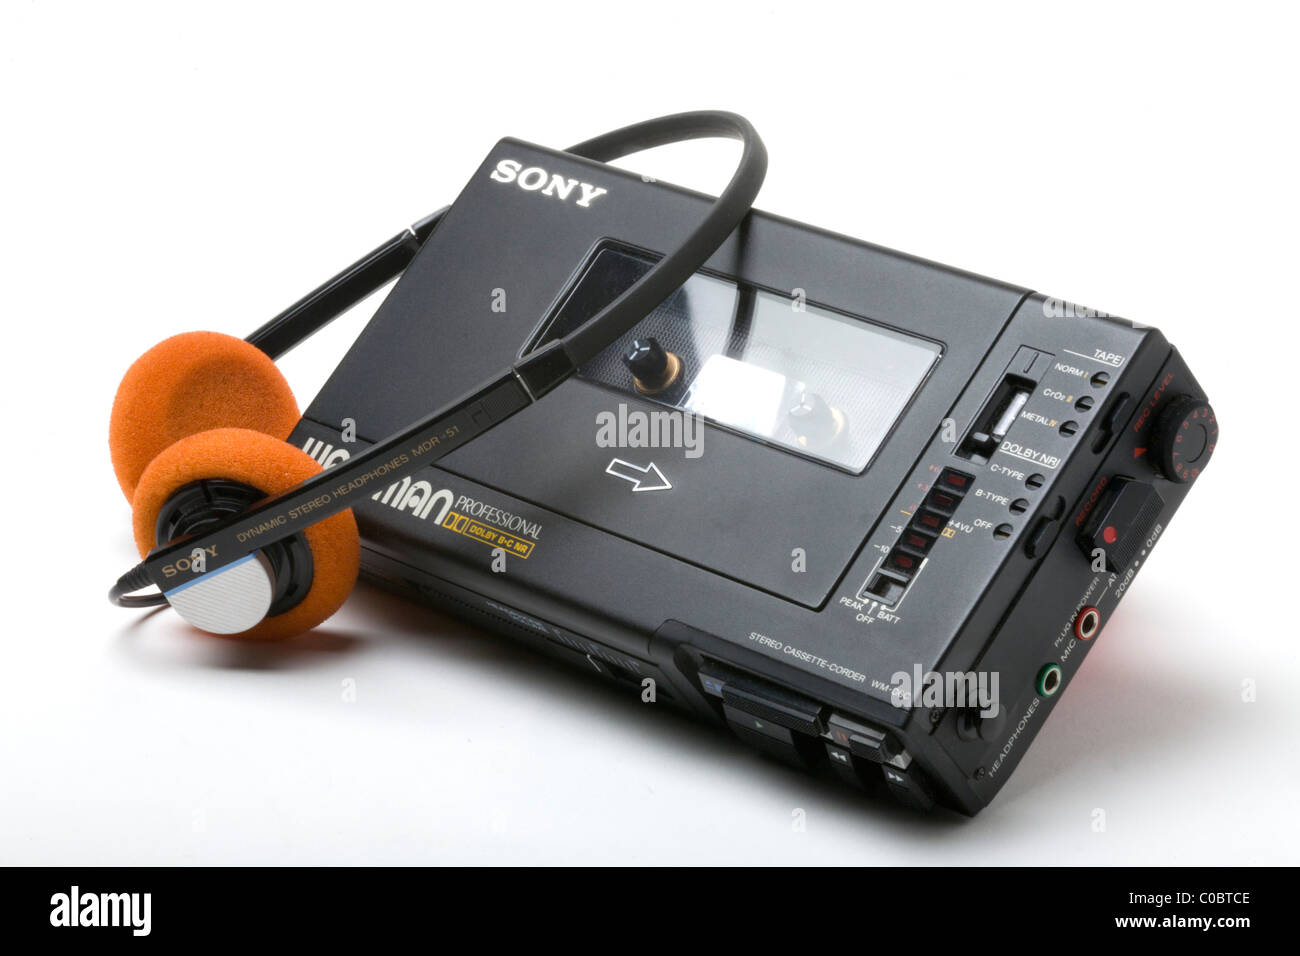 Sony Walkman Riproduttore di cassette Stereo Walkman registratore  professionale D6C Foto stock - Alamy